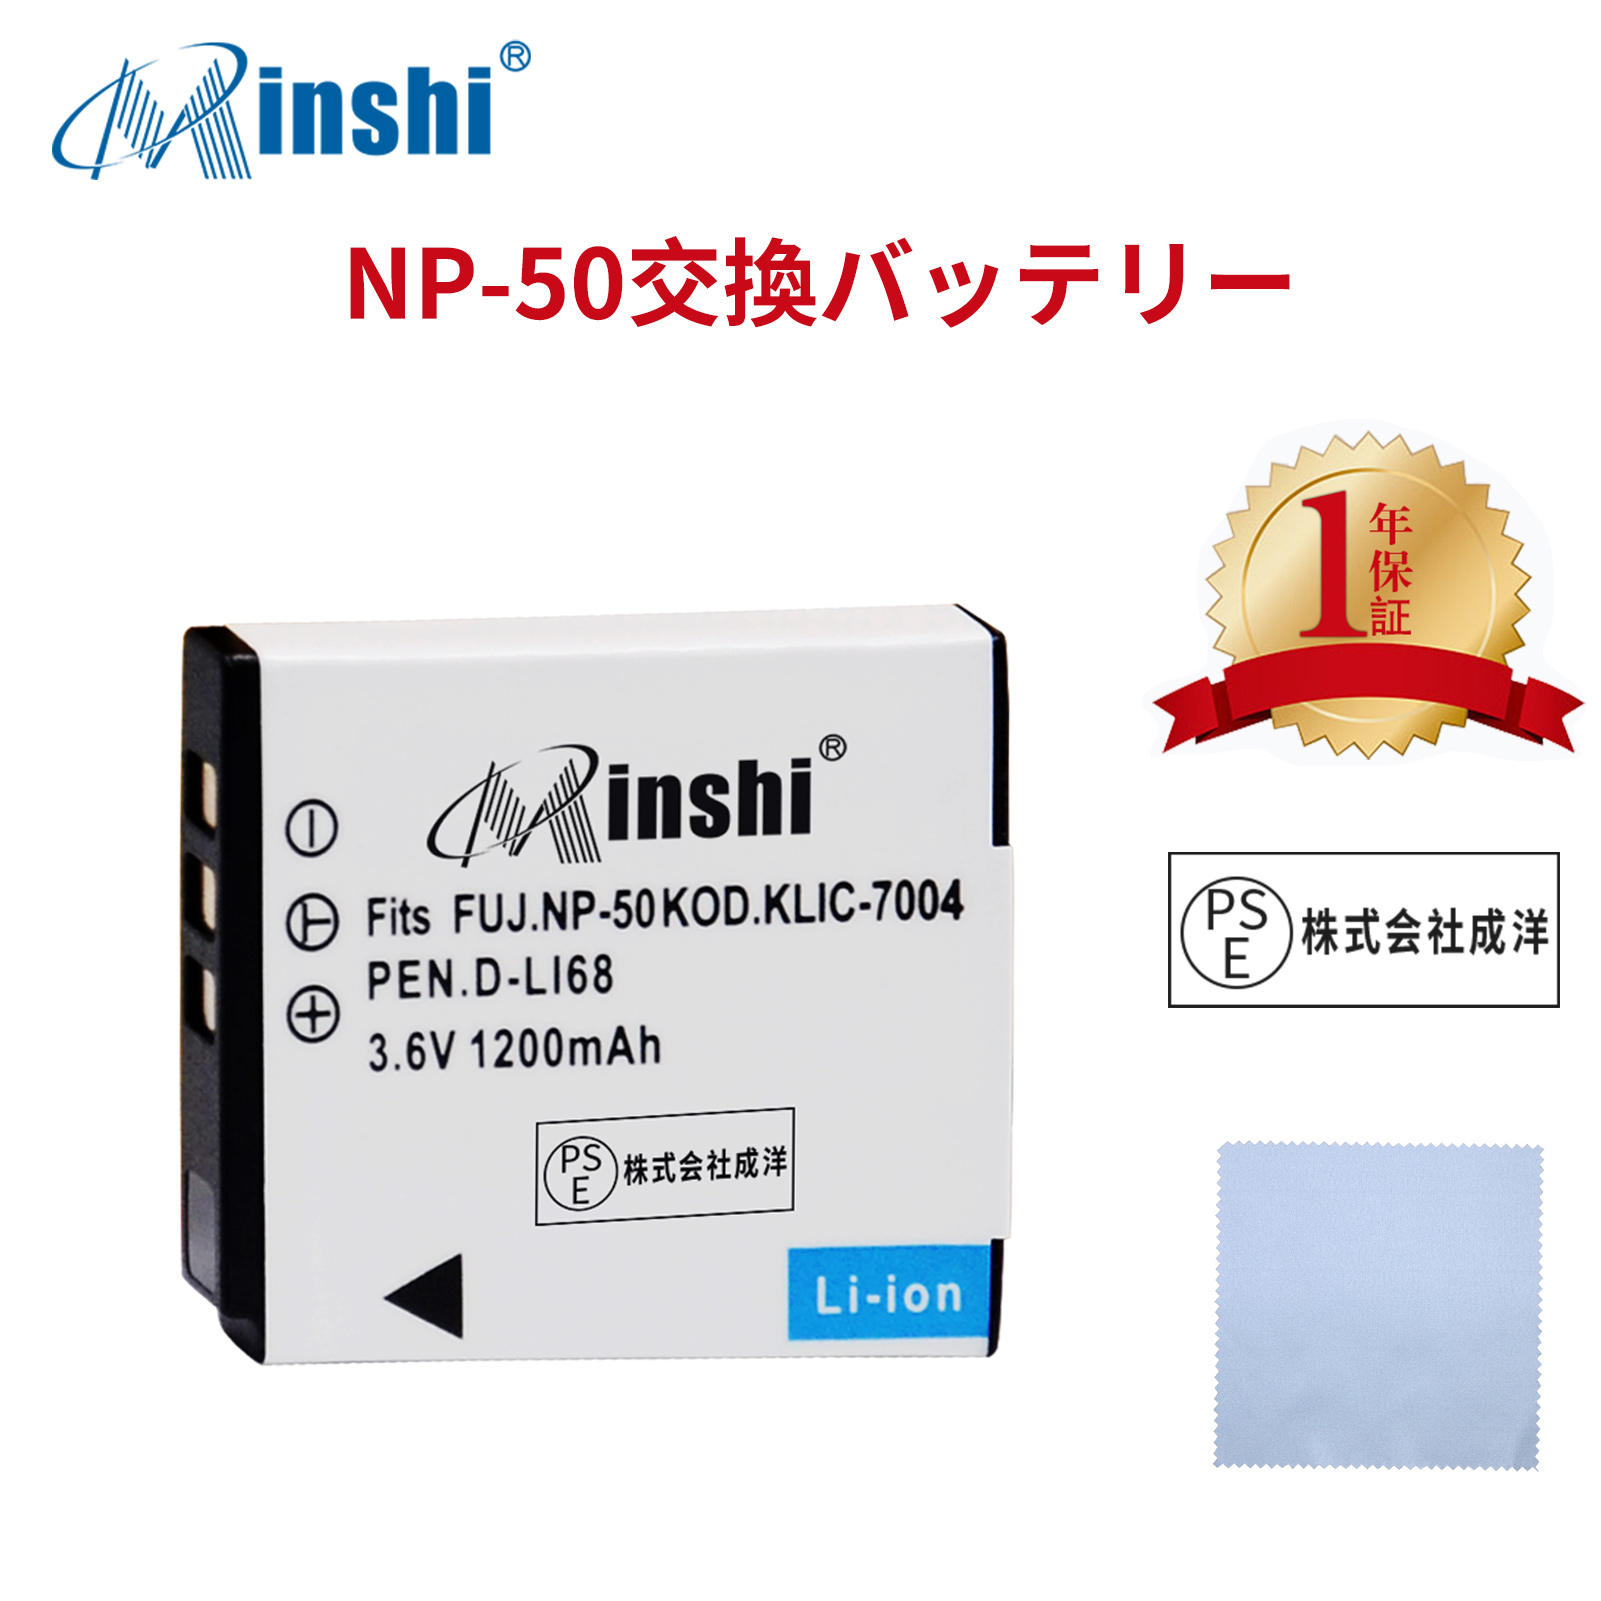 【清潔布ー付】minshi FUJIFILM NP-50A F900EXR対応 NP-50  1200mAh PSE認定済 高品質 NP-50NP-50、NP-50A互換バッテリー